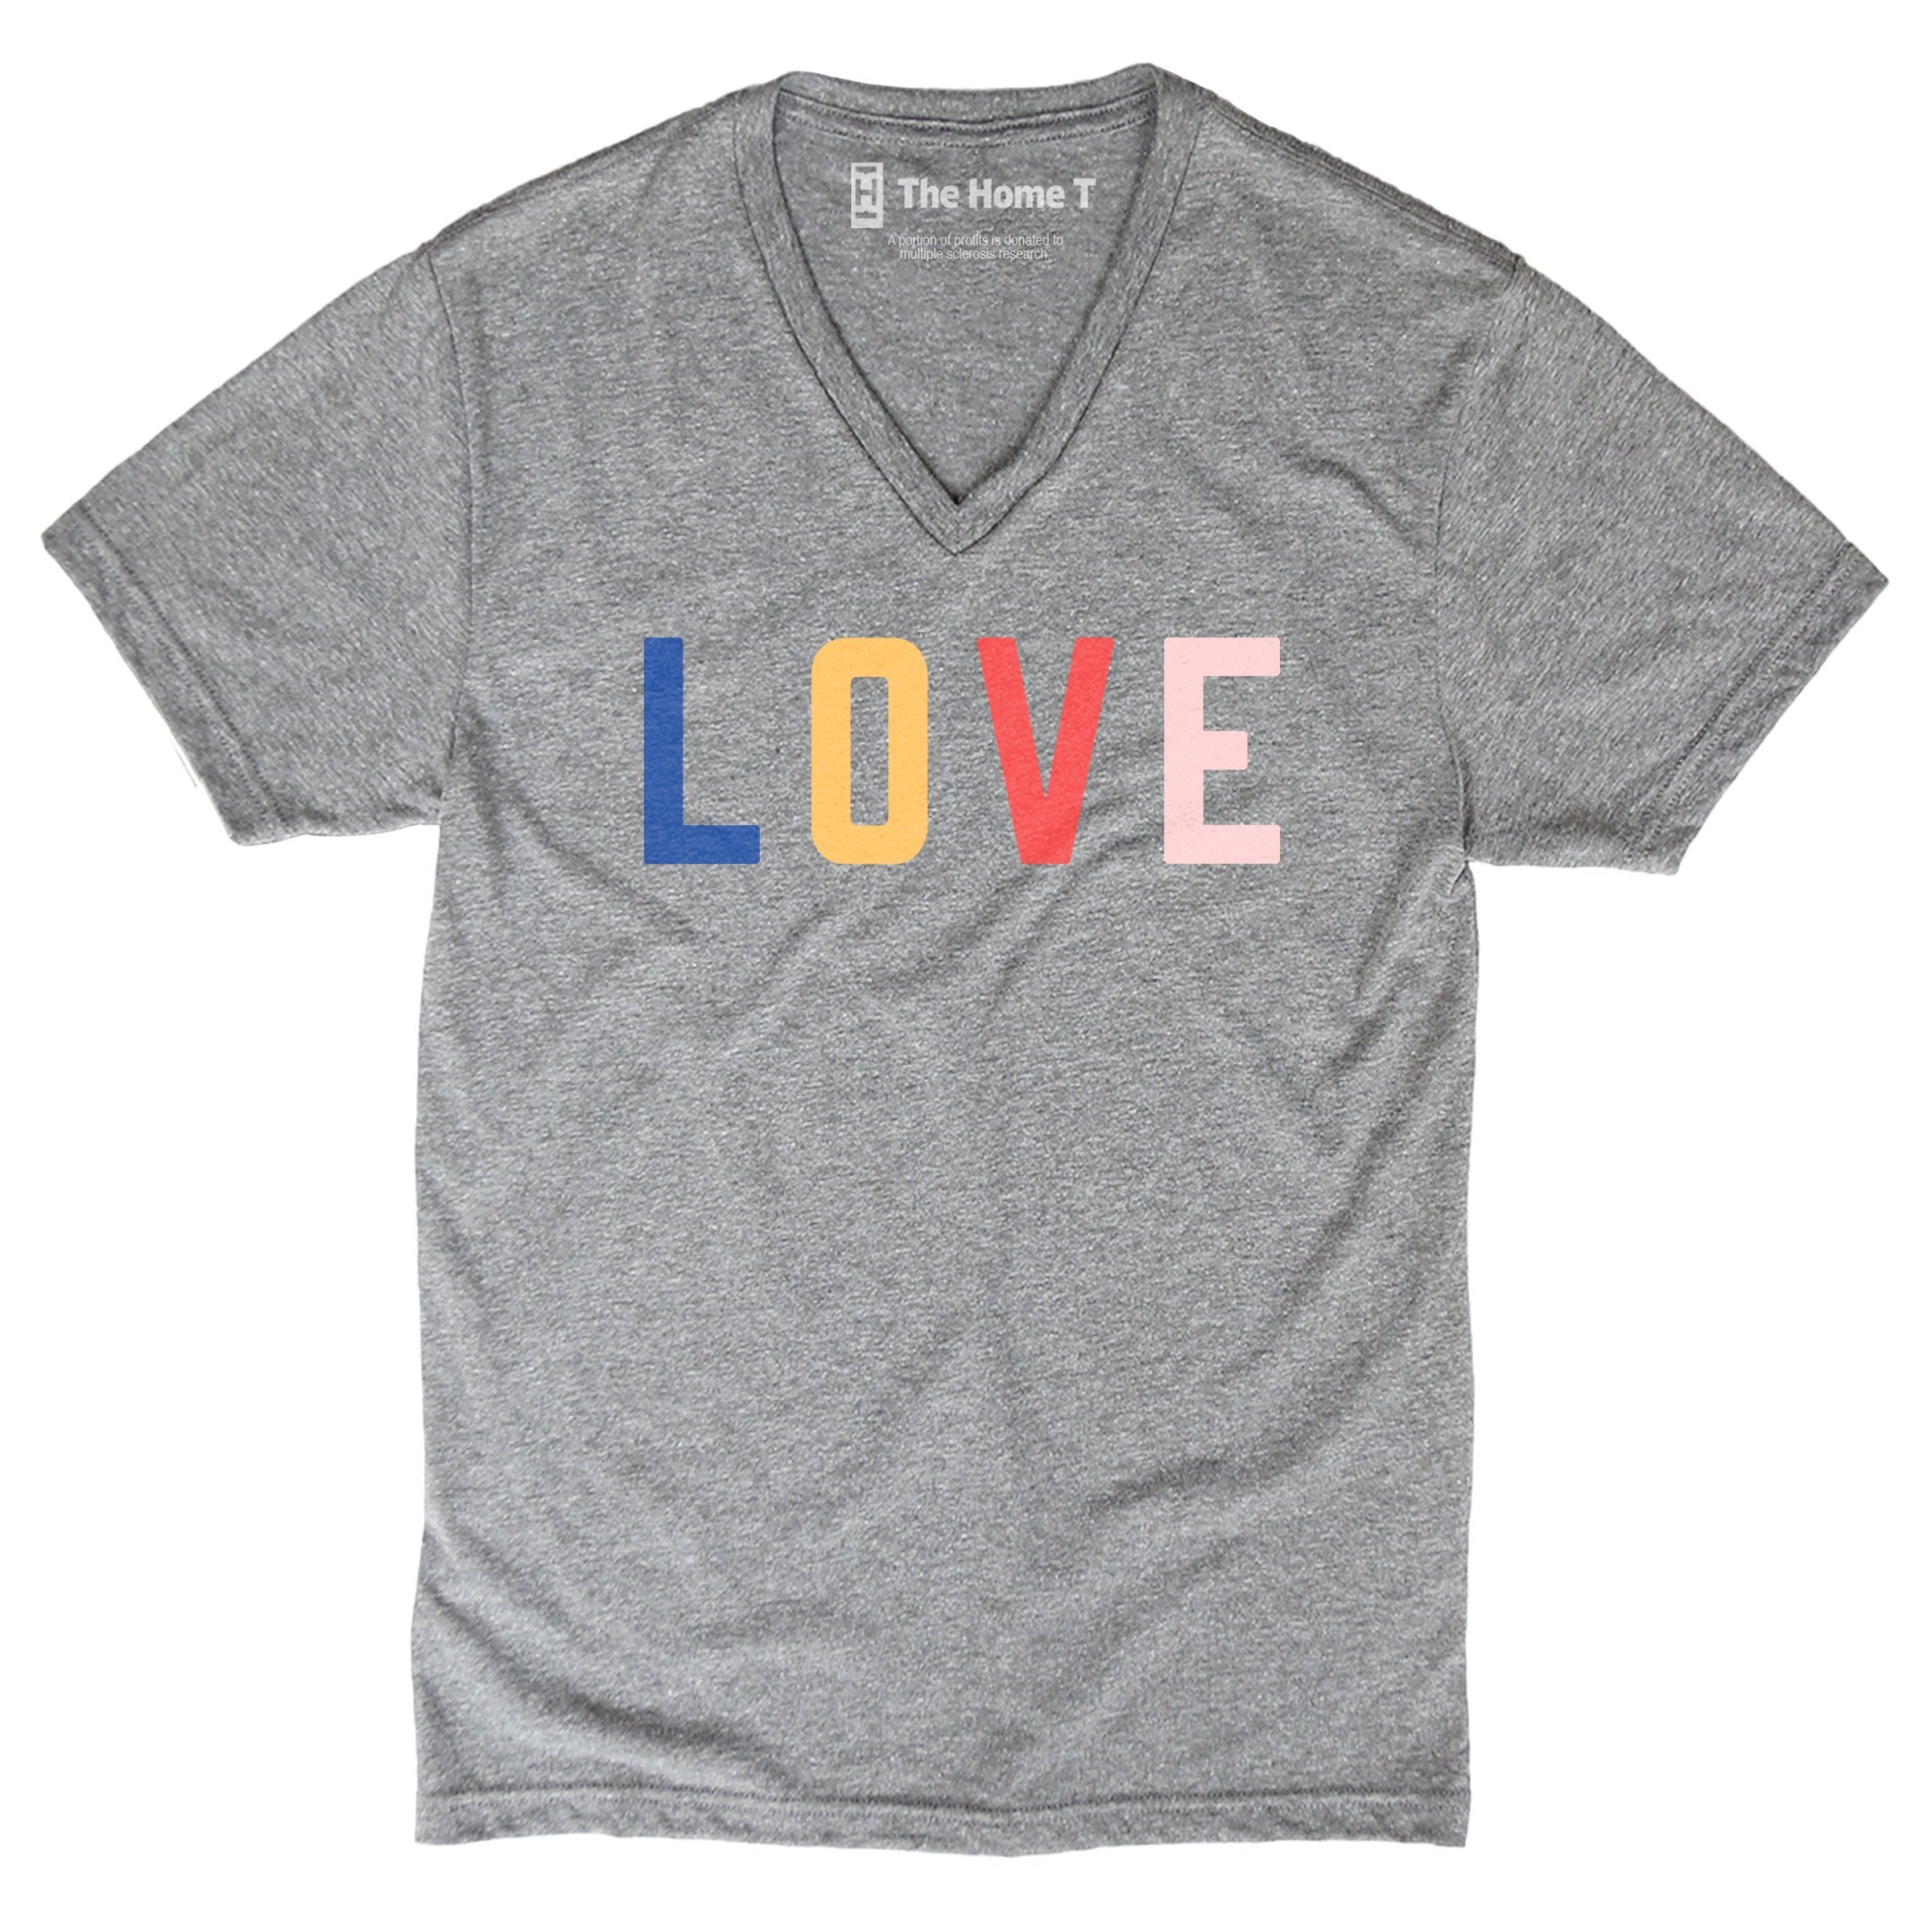 LOVE Color Pop Crew neck The Home T XS V-neck T-shirt